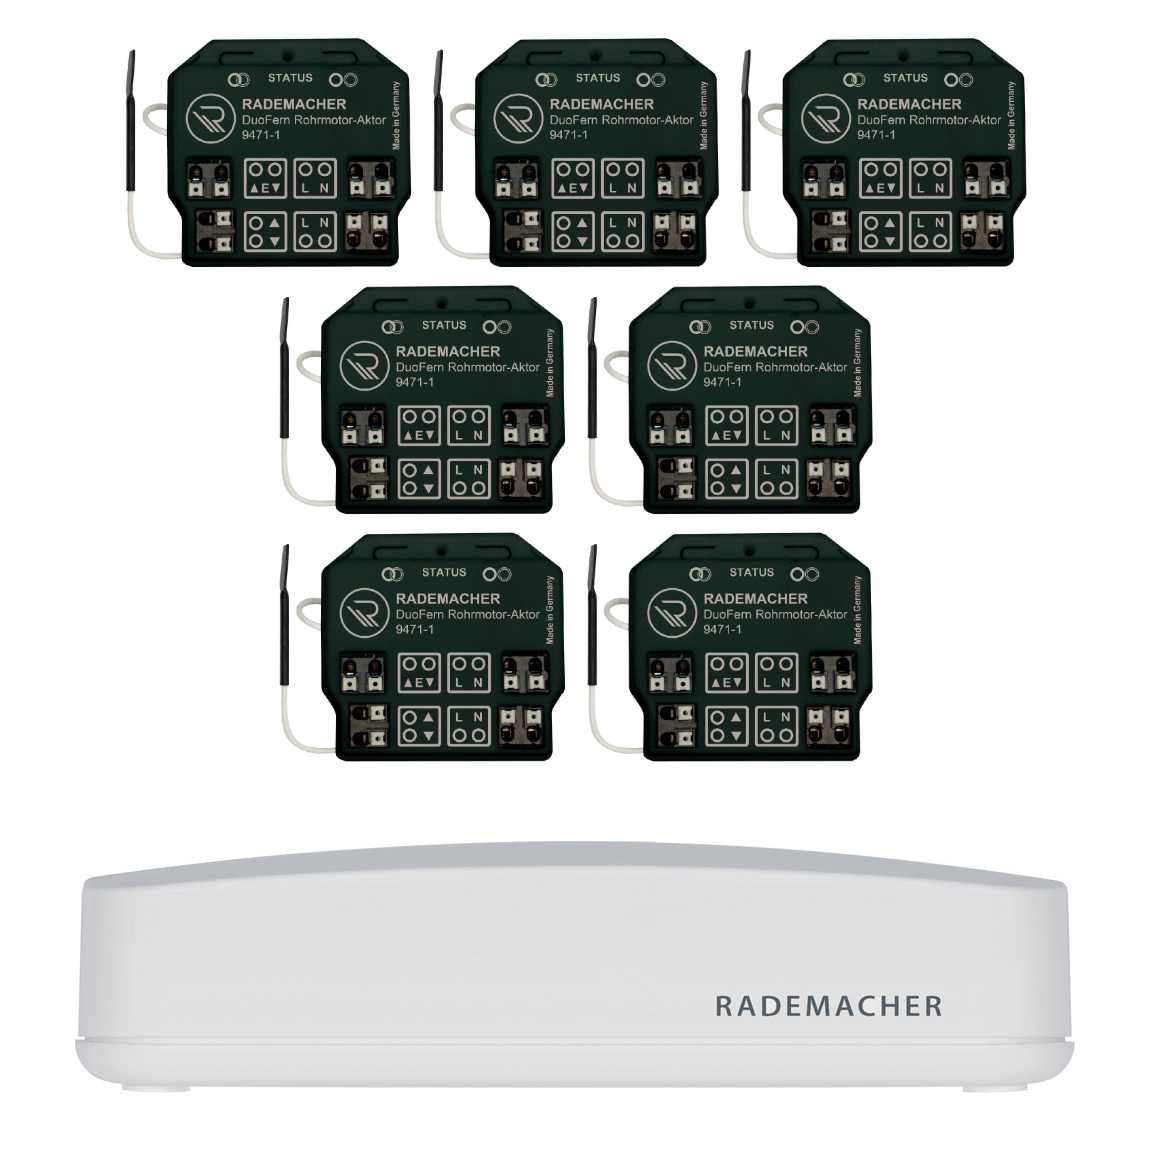 Rademacher HomePilot + DuoFern Rohrmotor-Aktor 7er-Set